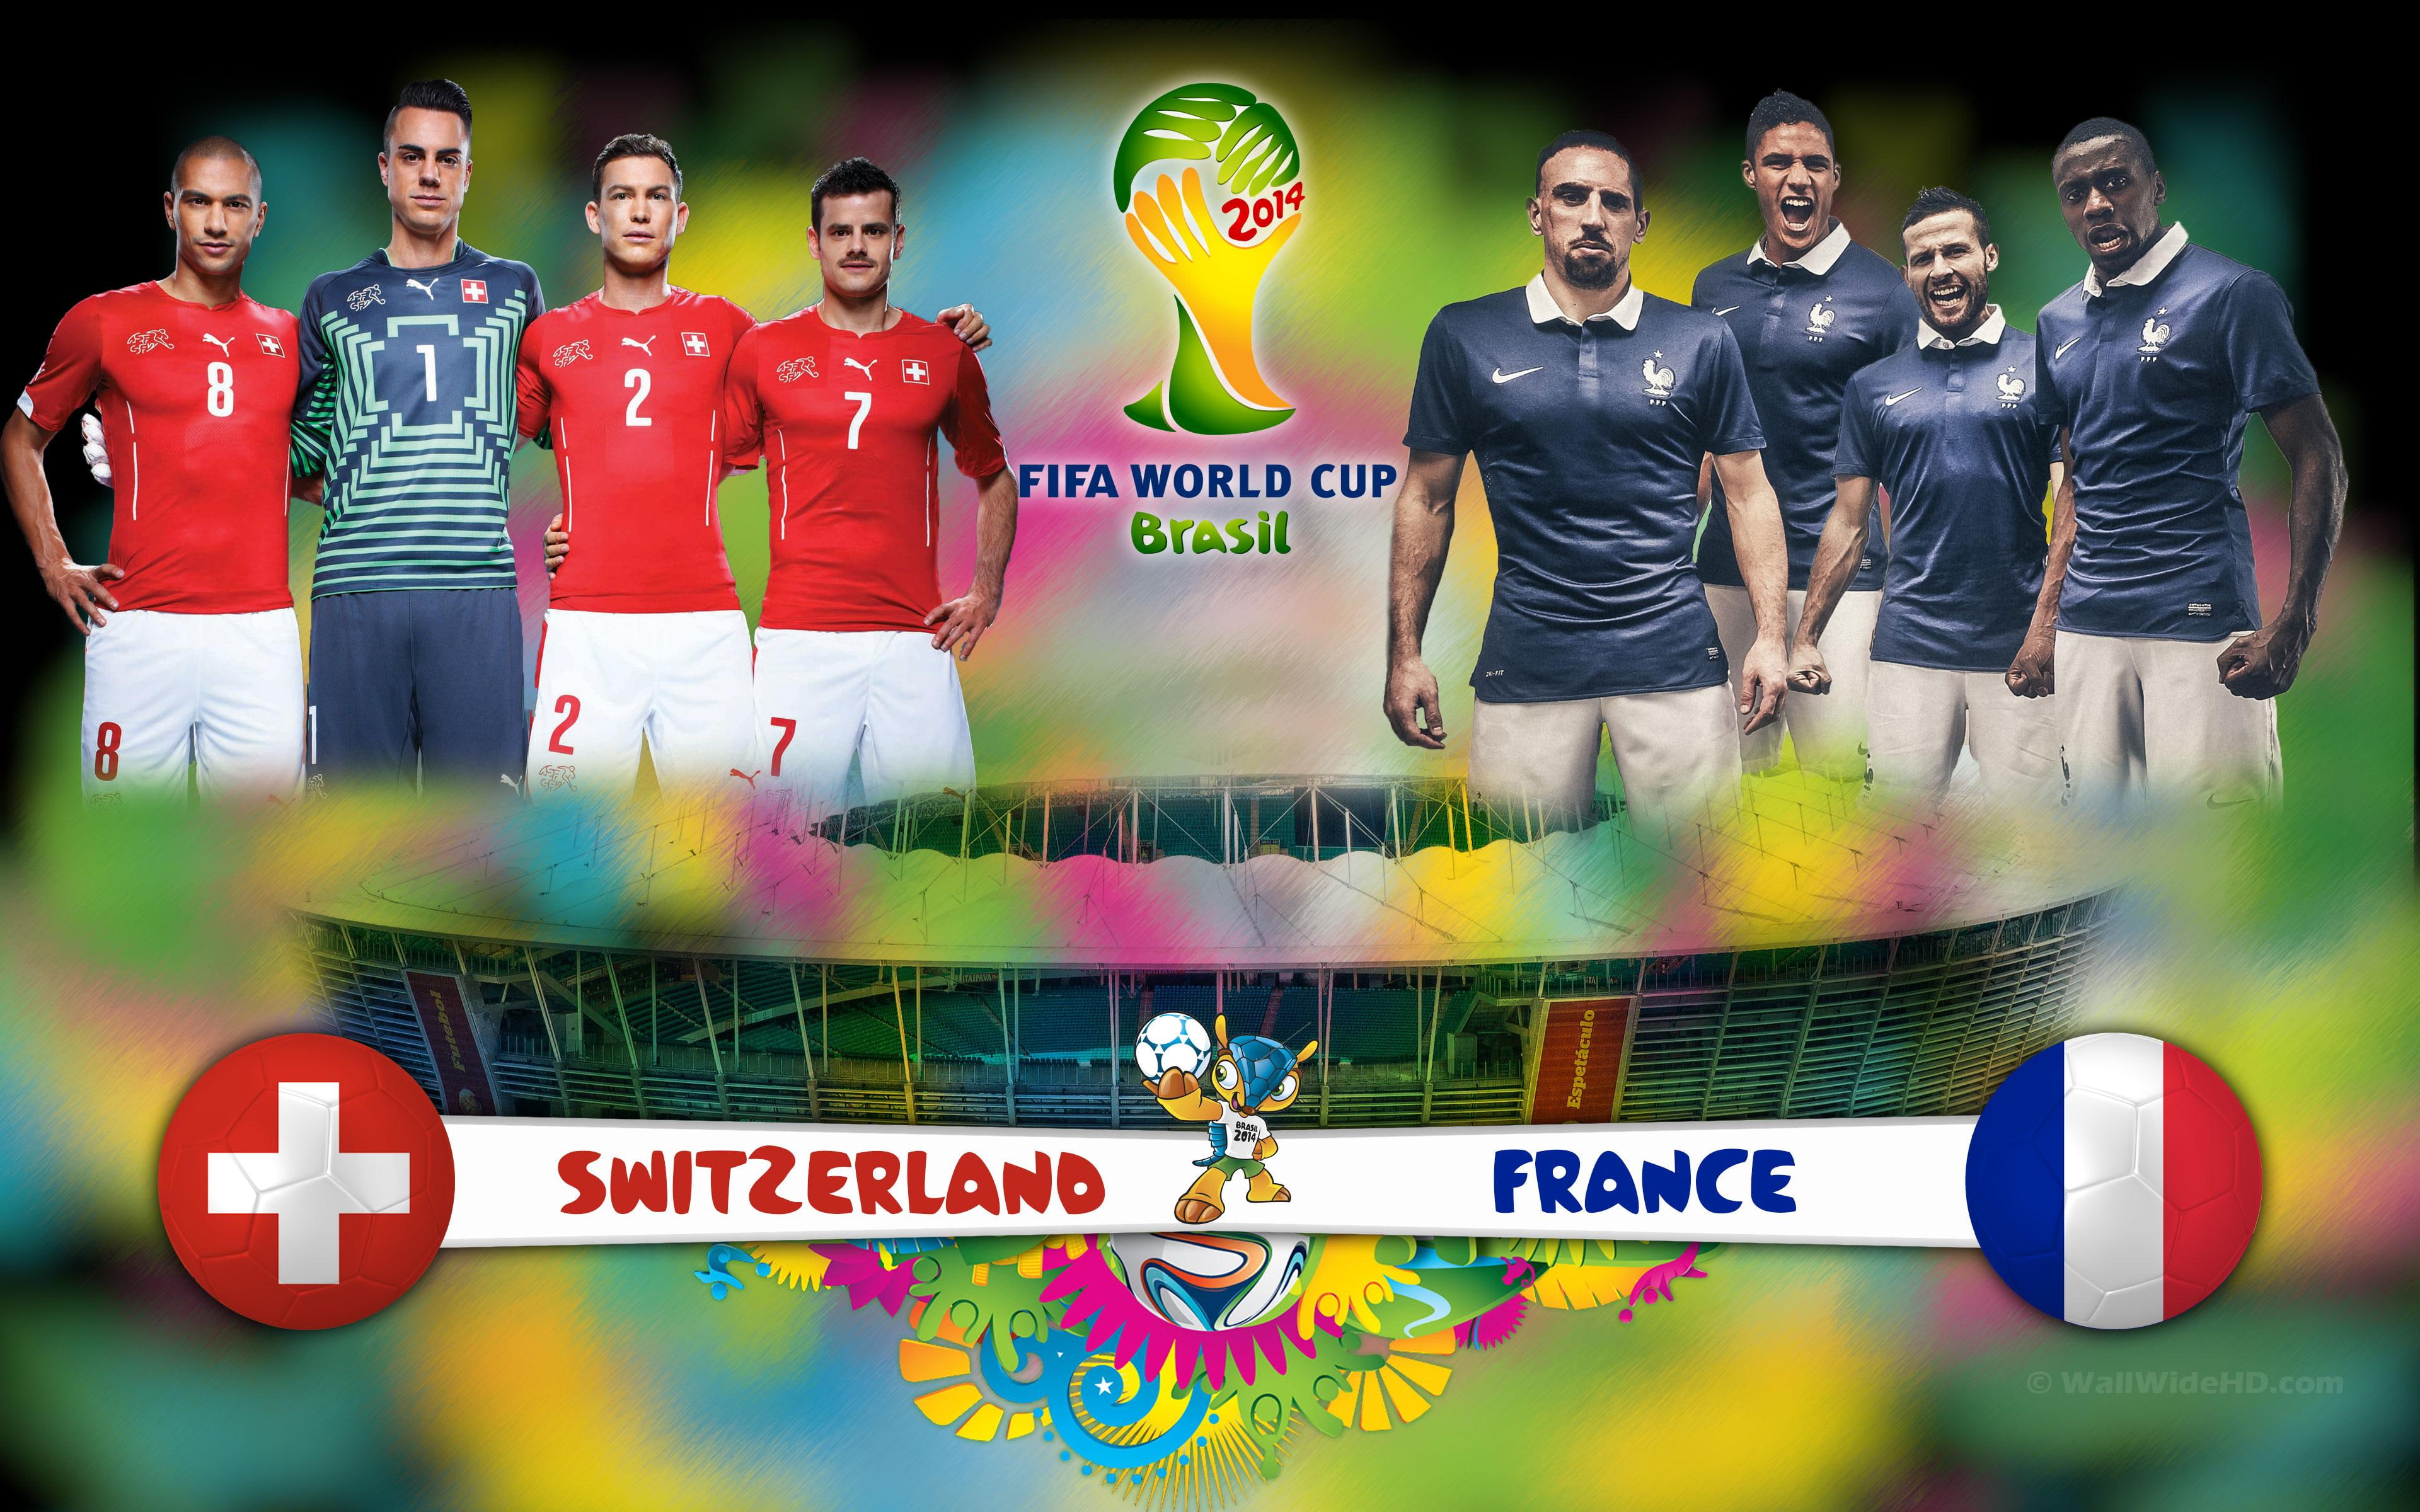 Switzerland vs France 2014 World Cup Group E Football Match